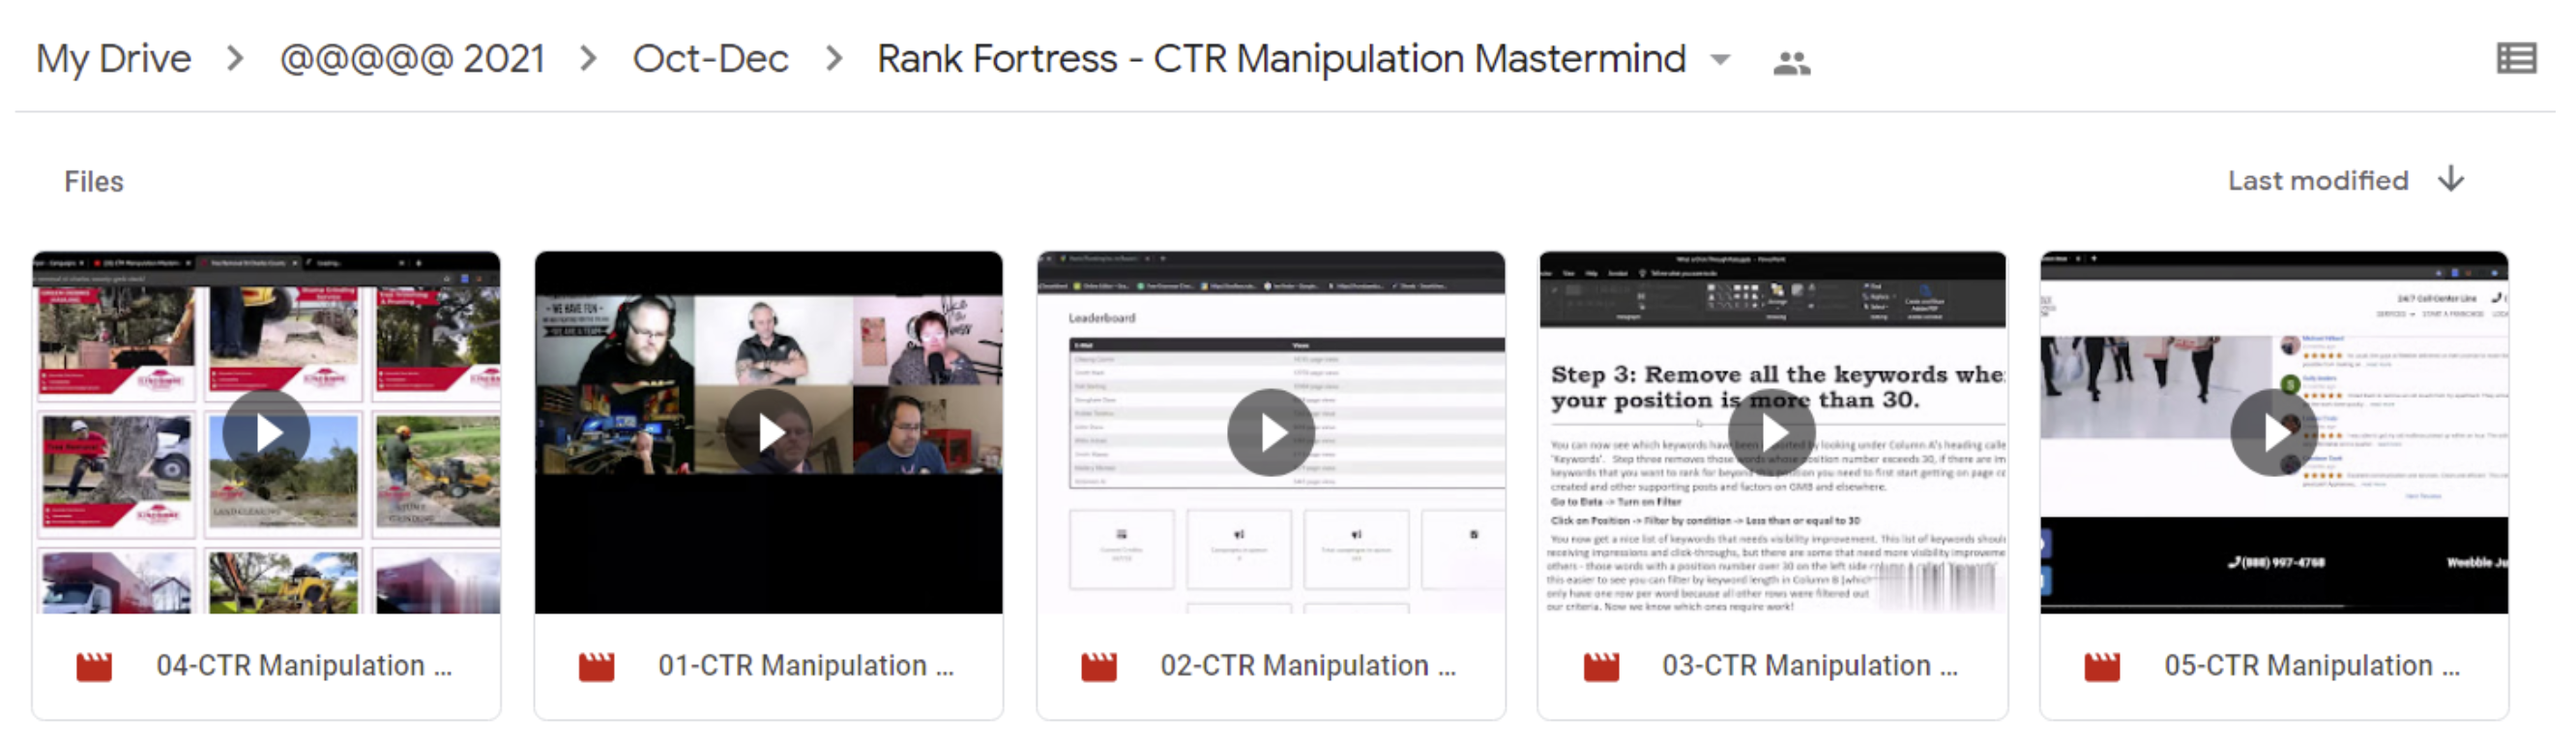 Rank Fortness - Ctr Manipulation